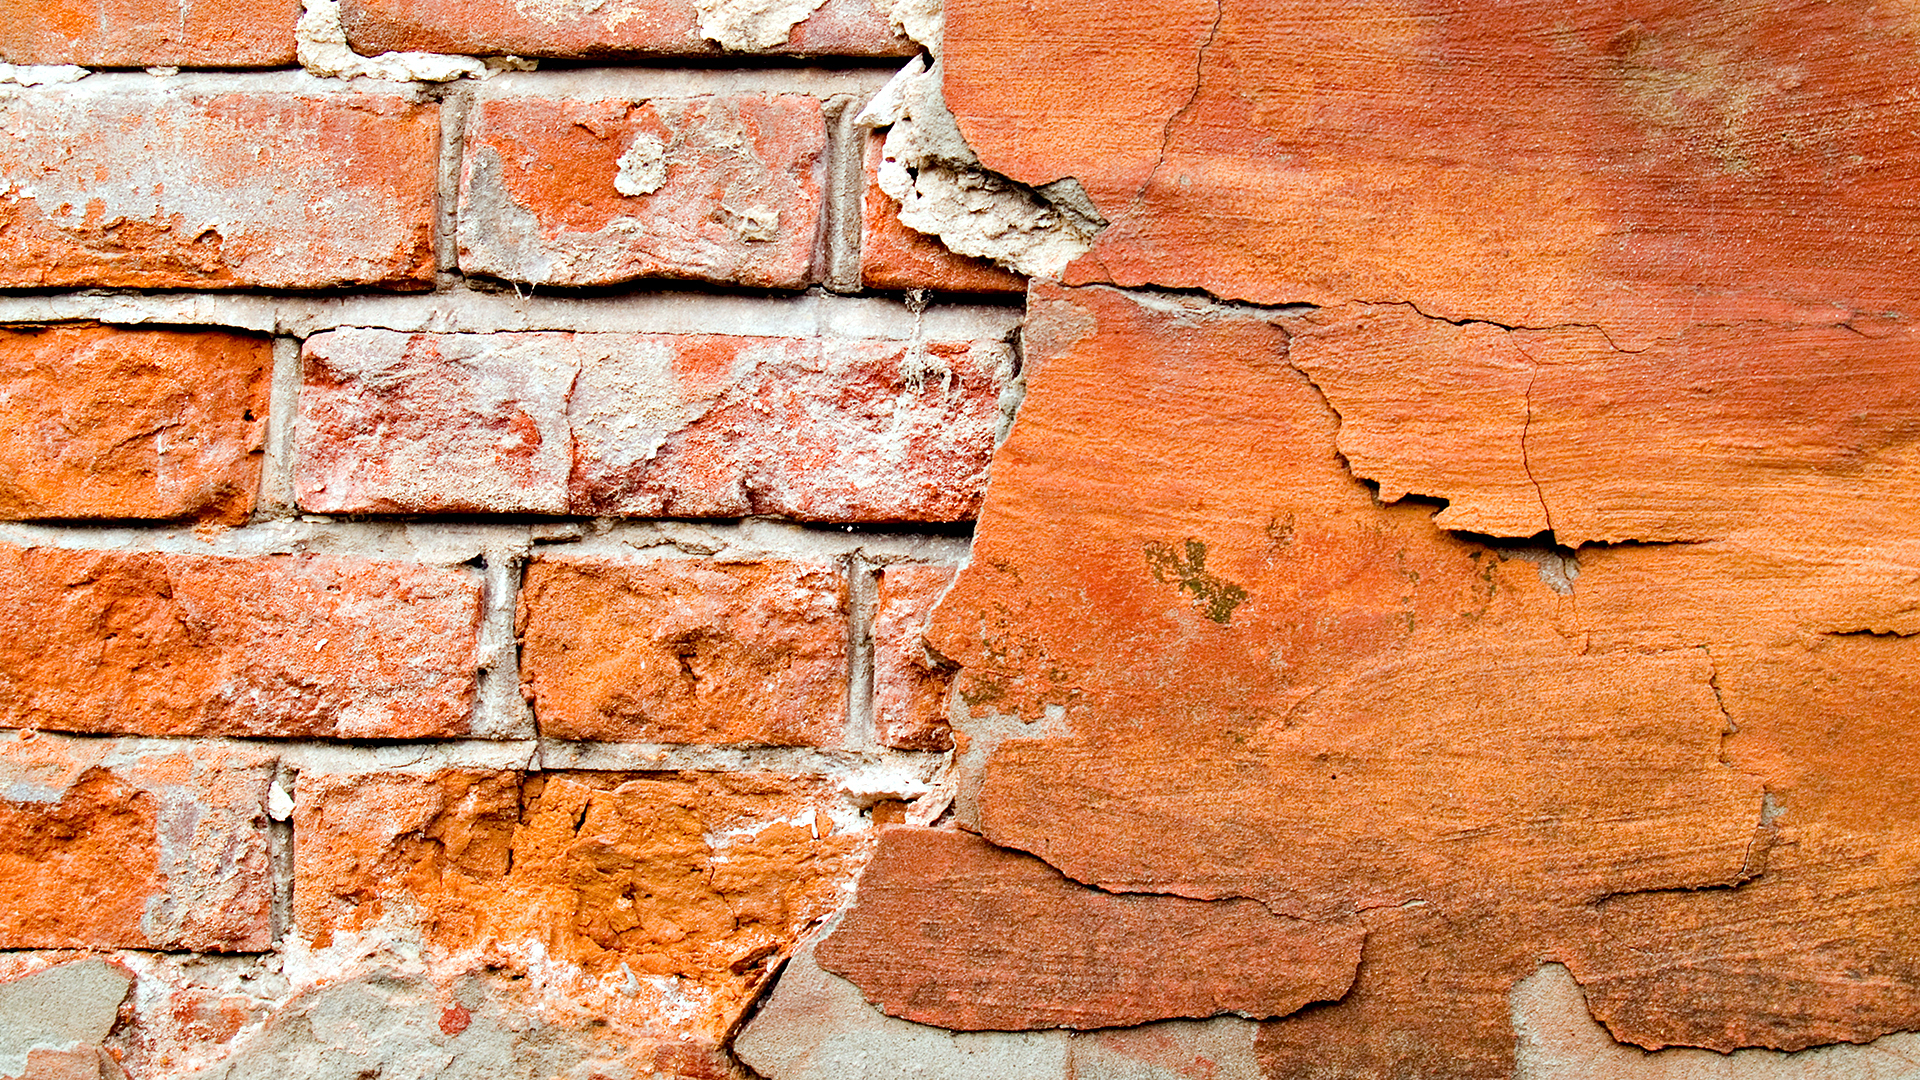  old brick wall bricks background texture download photo stucco